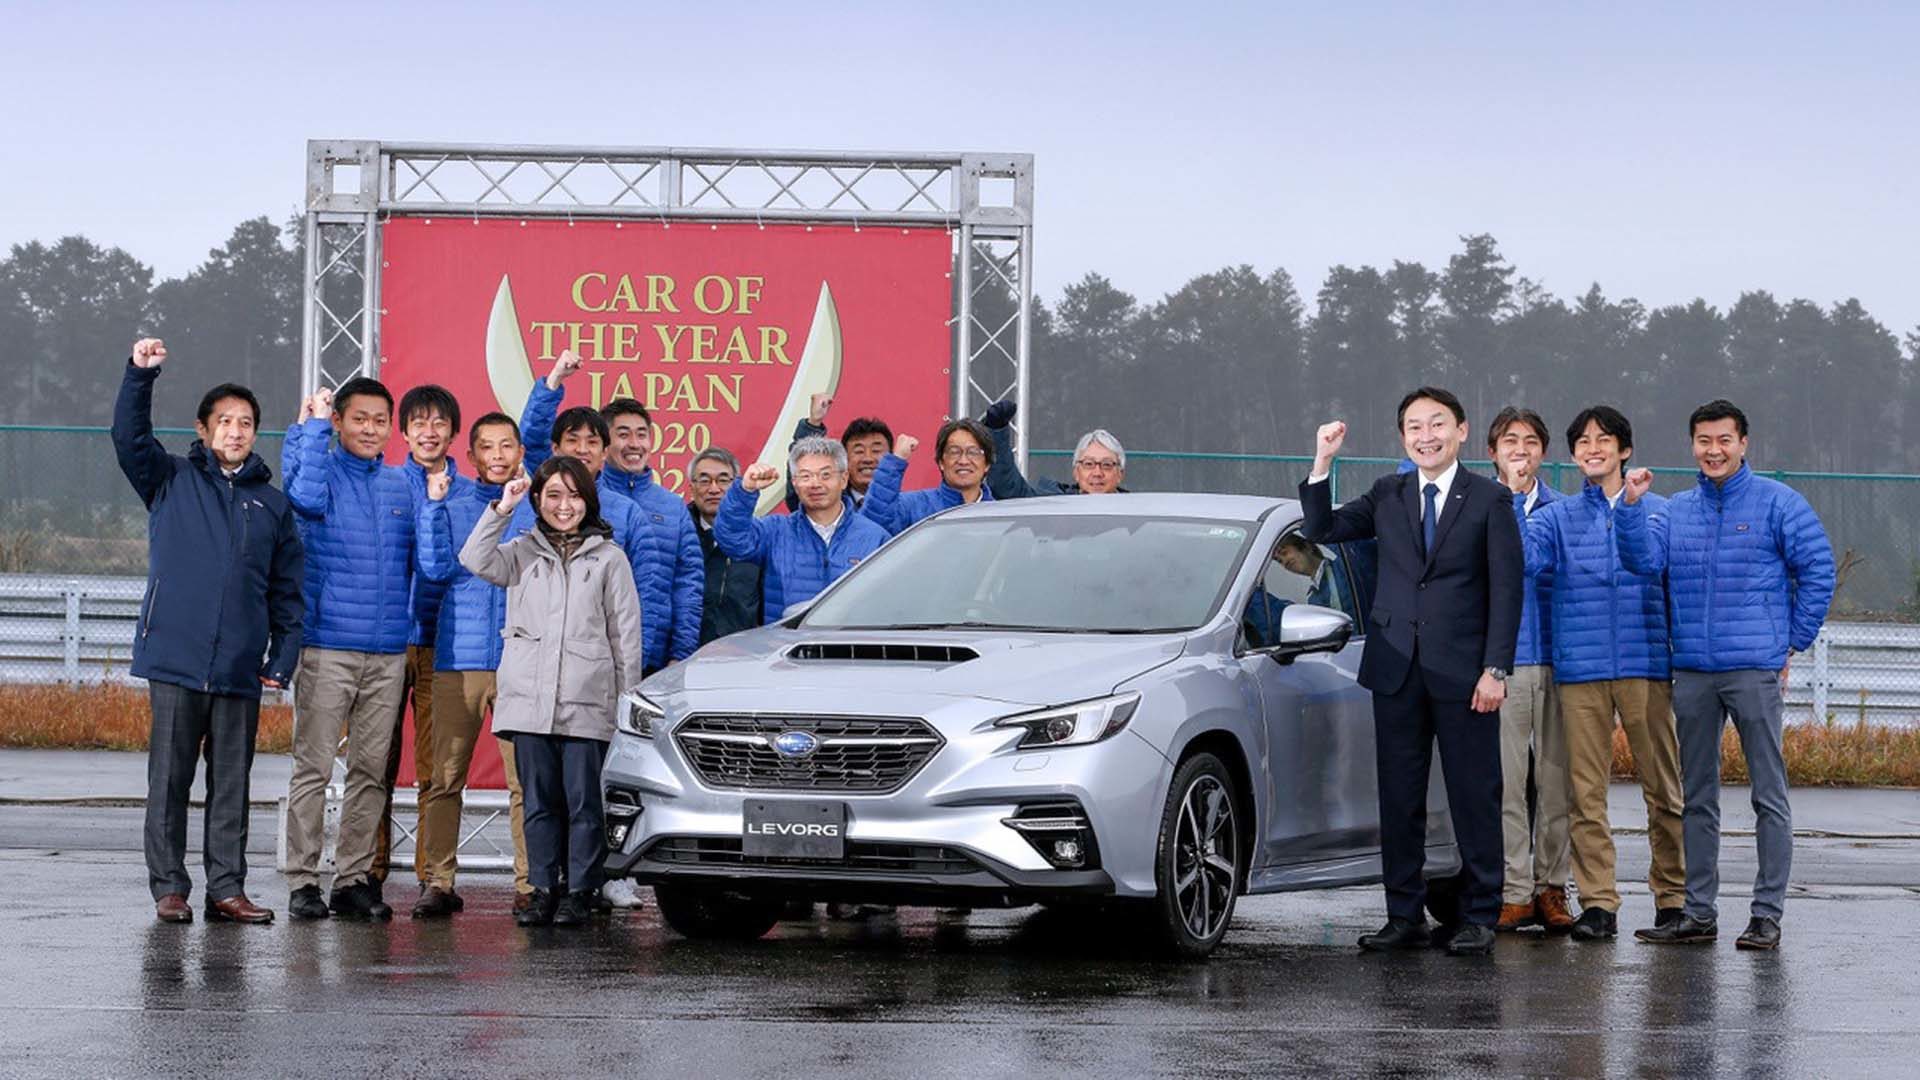 Subaru Levorg is a winner